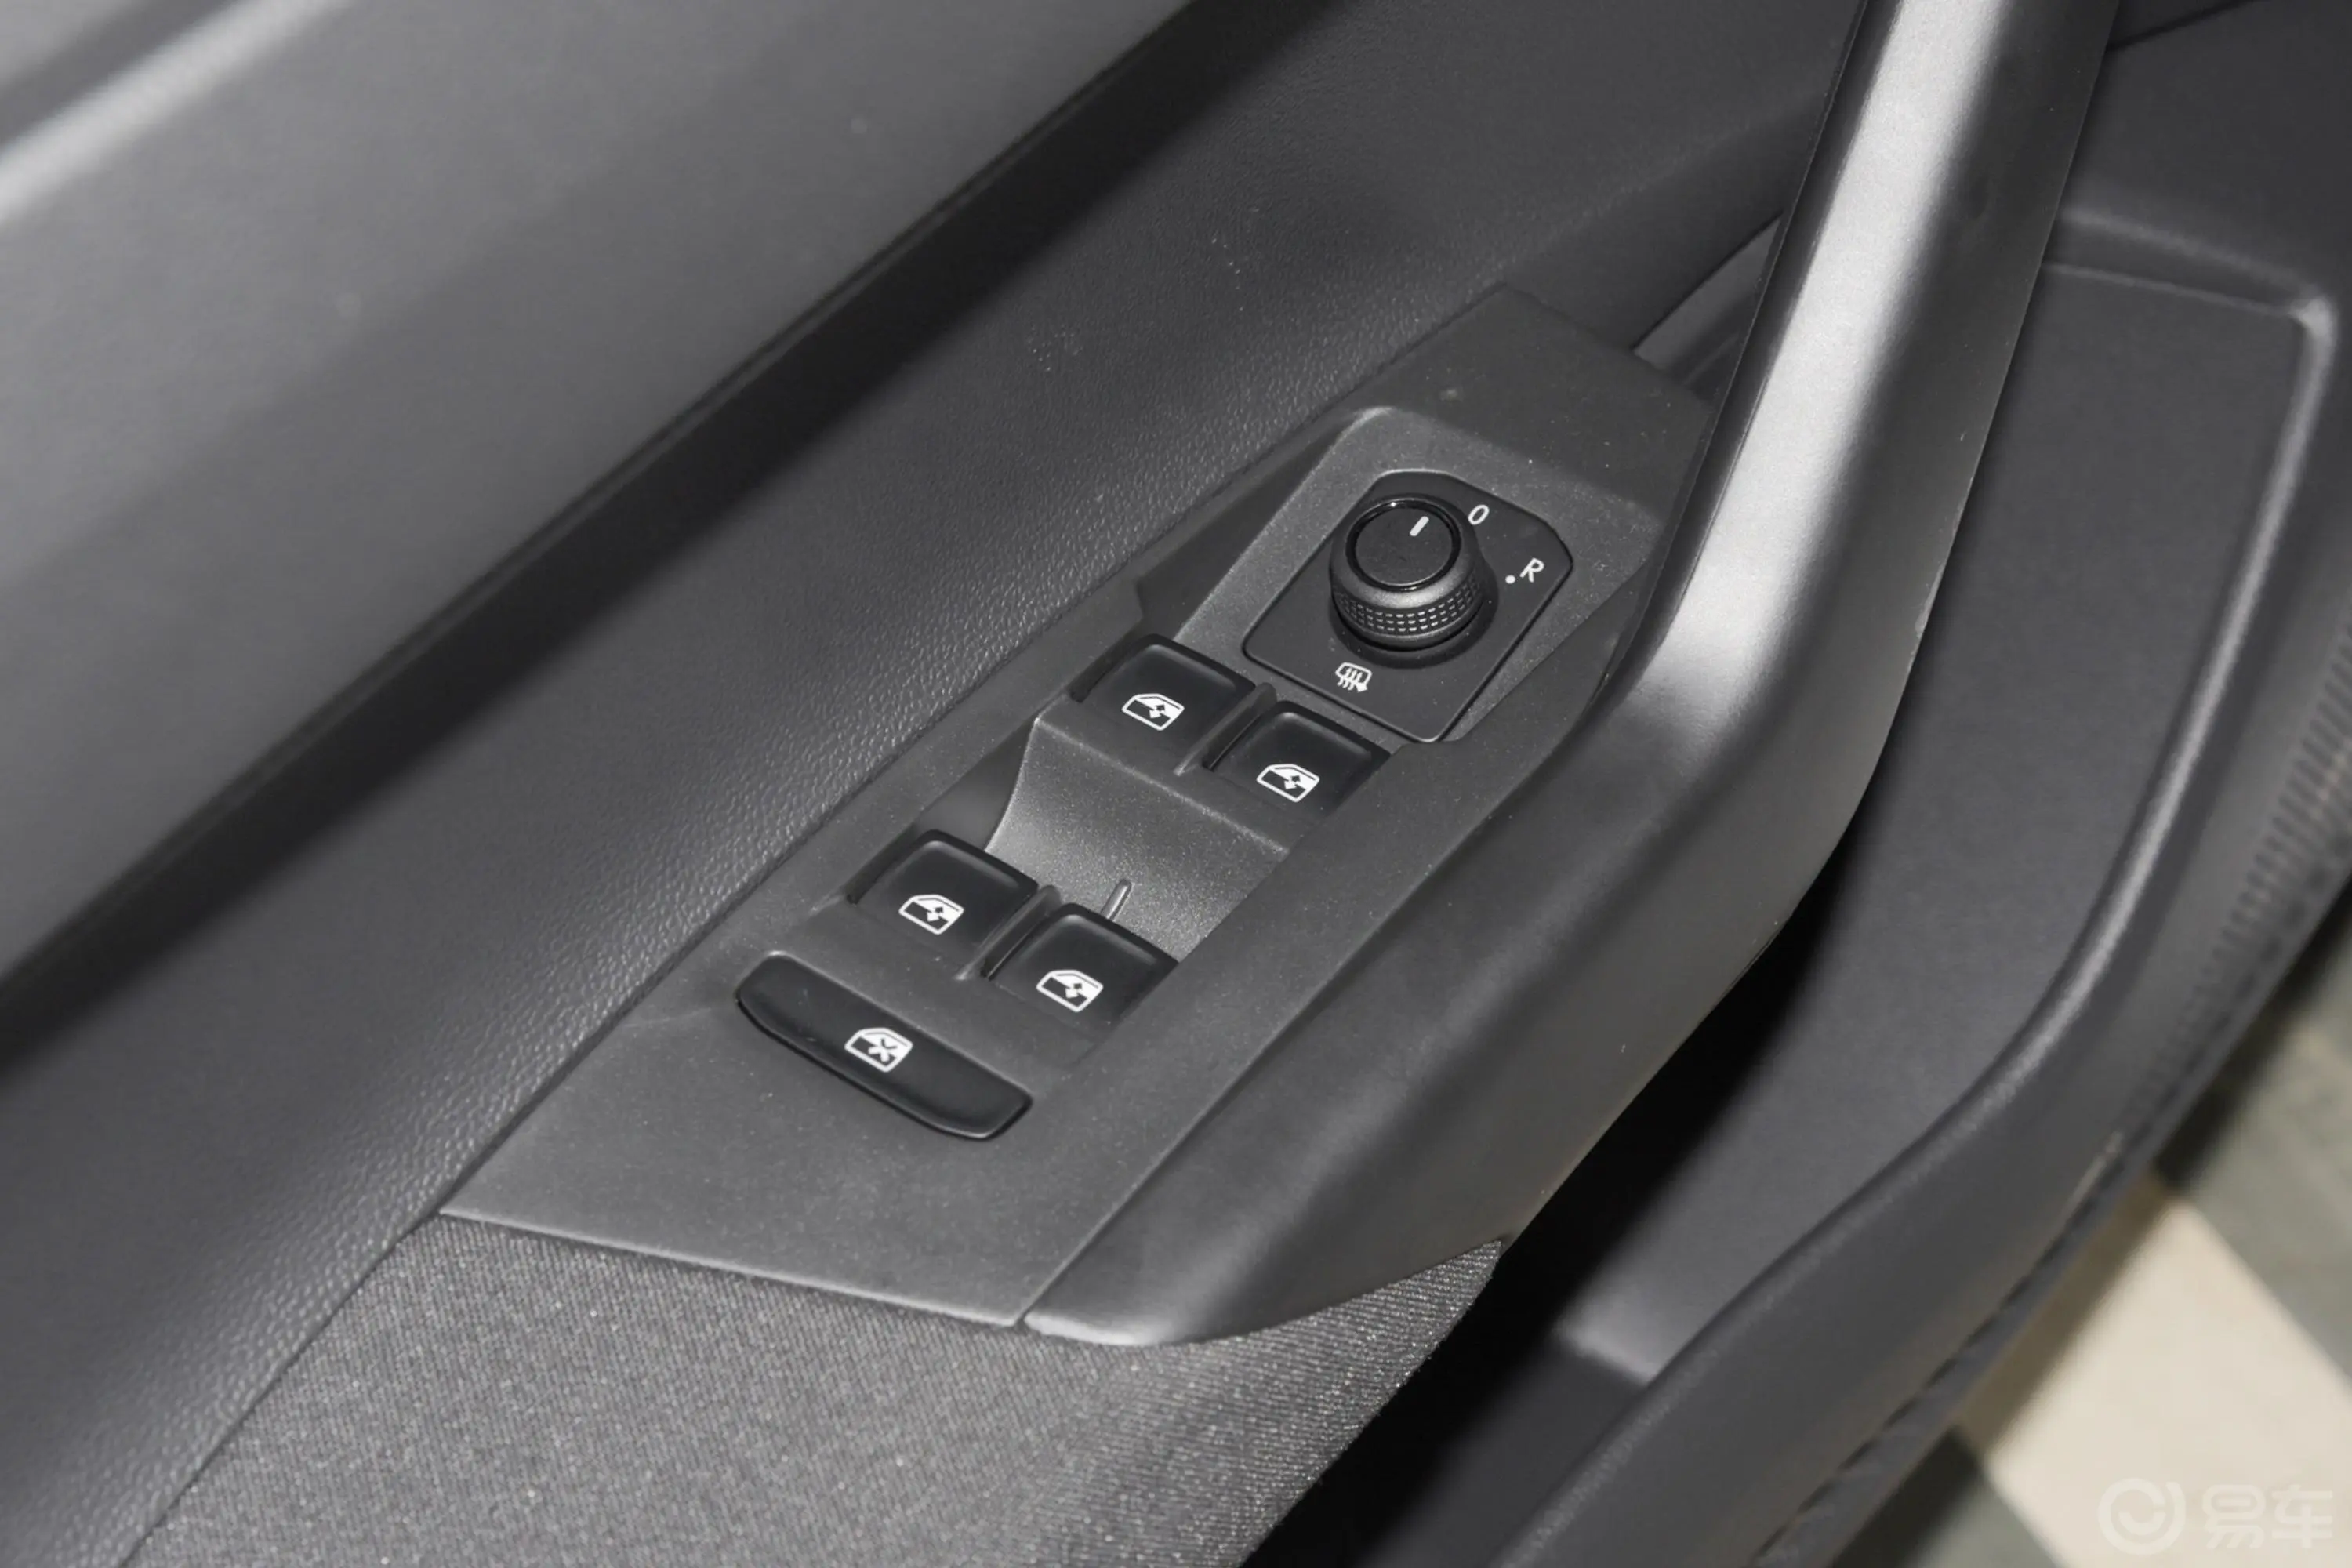 PoloPlus 1.5L 手动 全景乐享版车窗调节整体